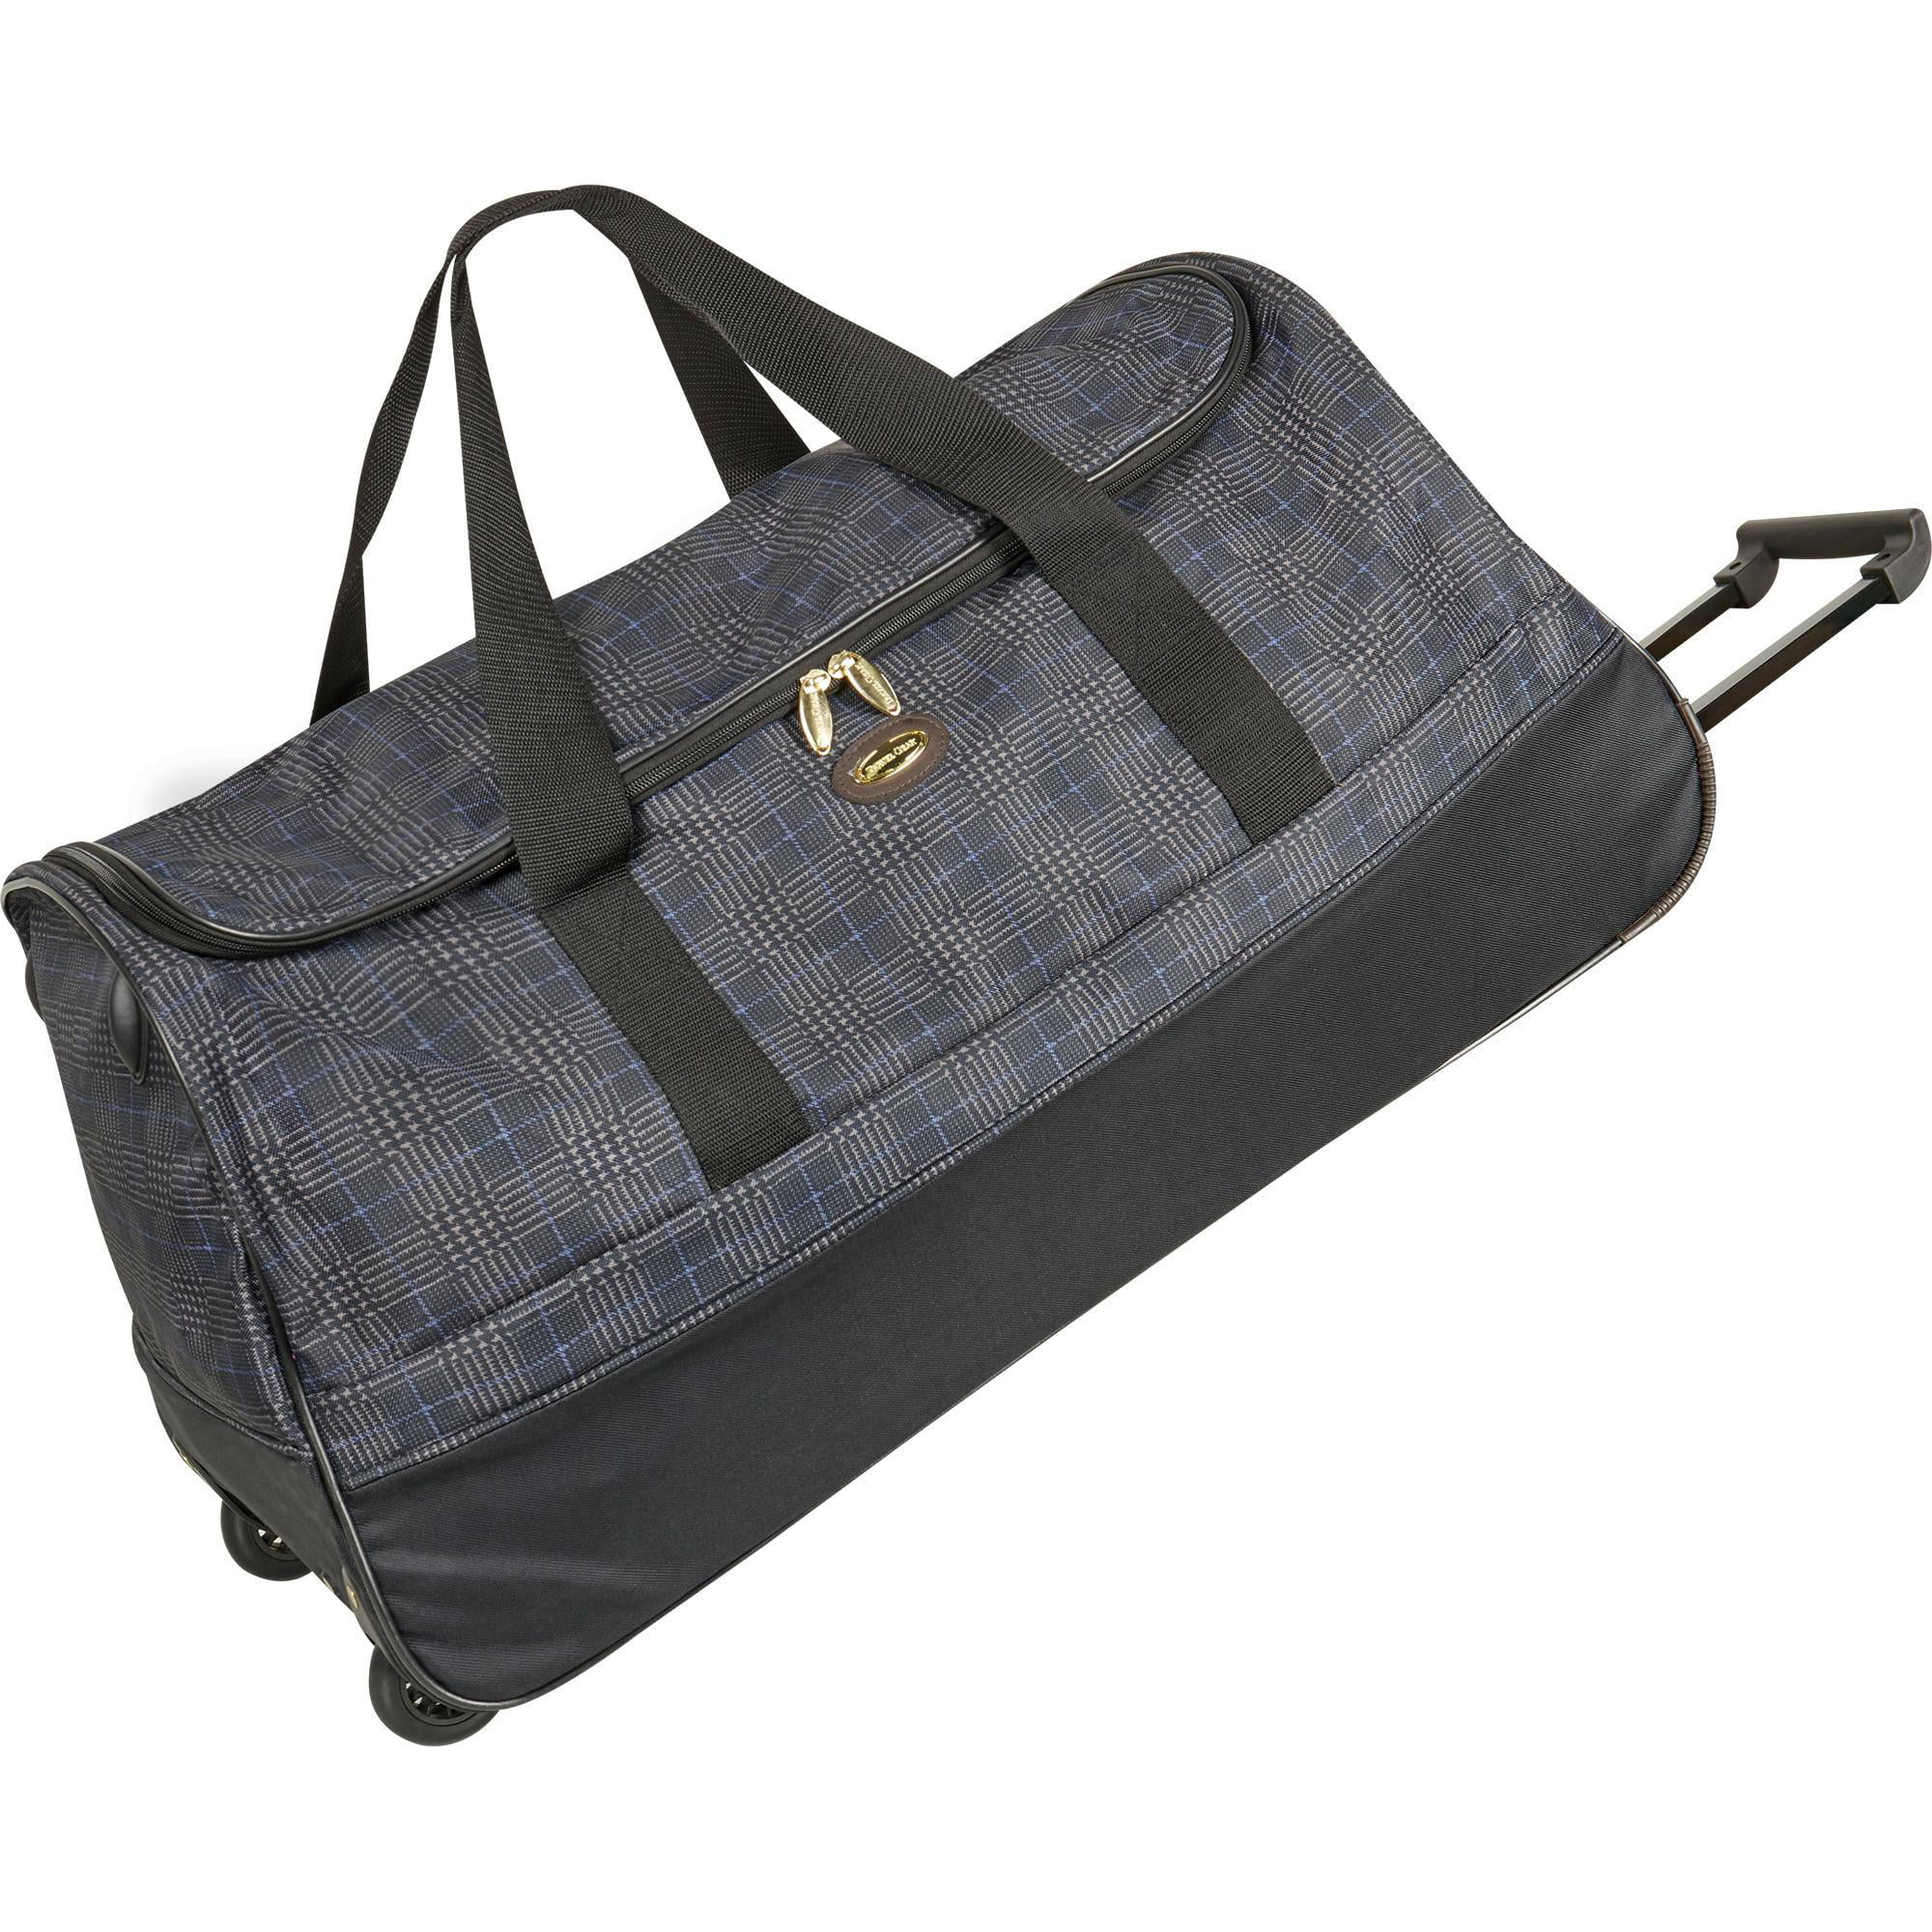 Travel Gear 30&quot; Wheeled Duffle Bag - www.bagsaleusa.com/product-category/classic-bags/ - www.bagsaleusa.com/product-category/classic-bags/